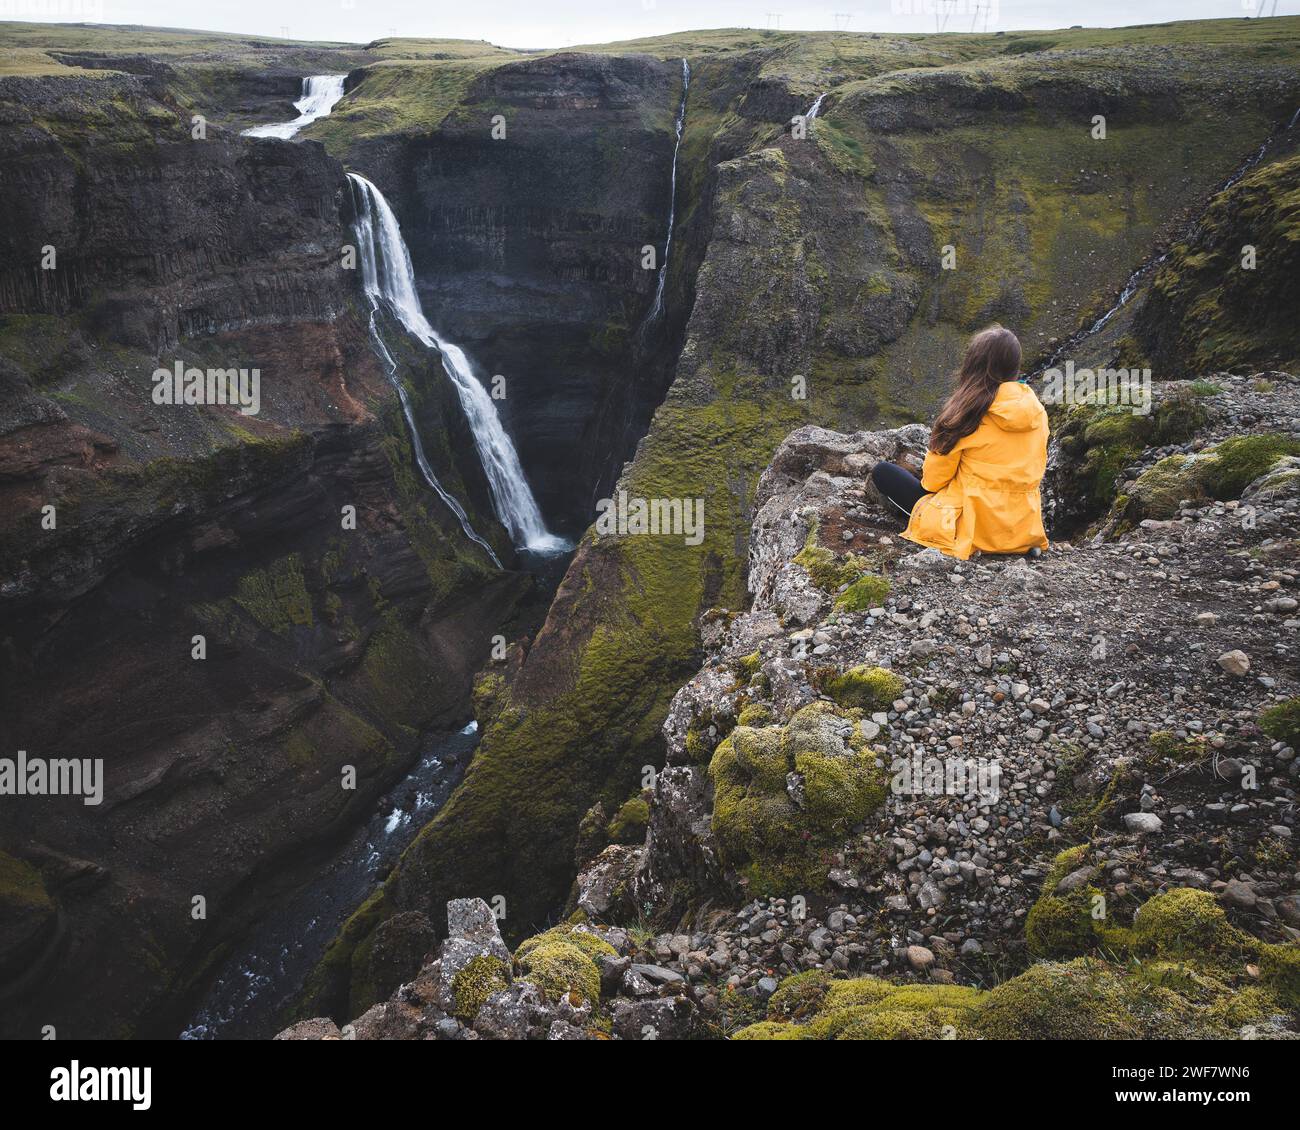 Iceland adventure: yellow rain jacket, rocky outcrop and majestic waterfall Stock Photo